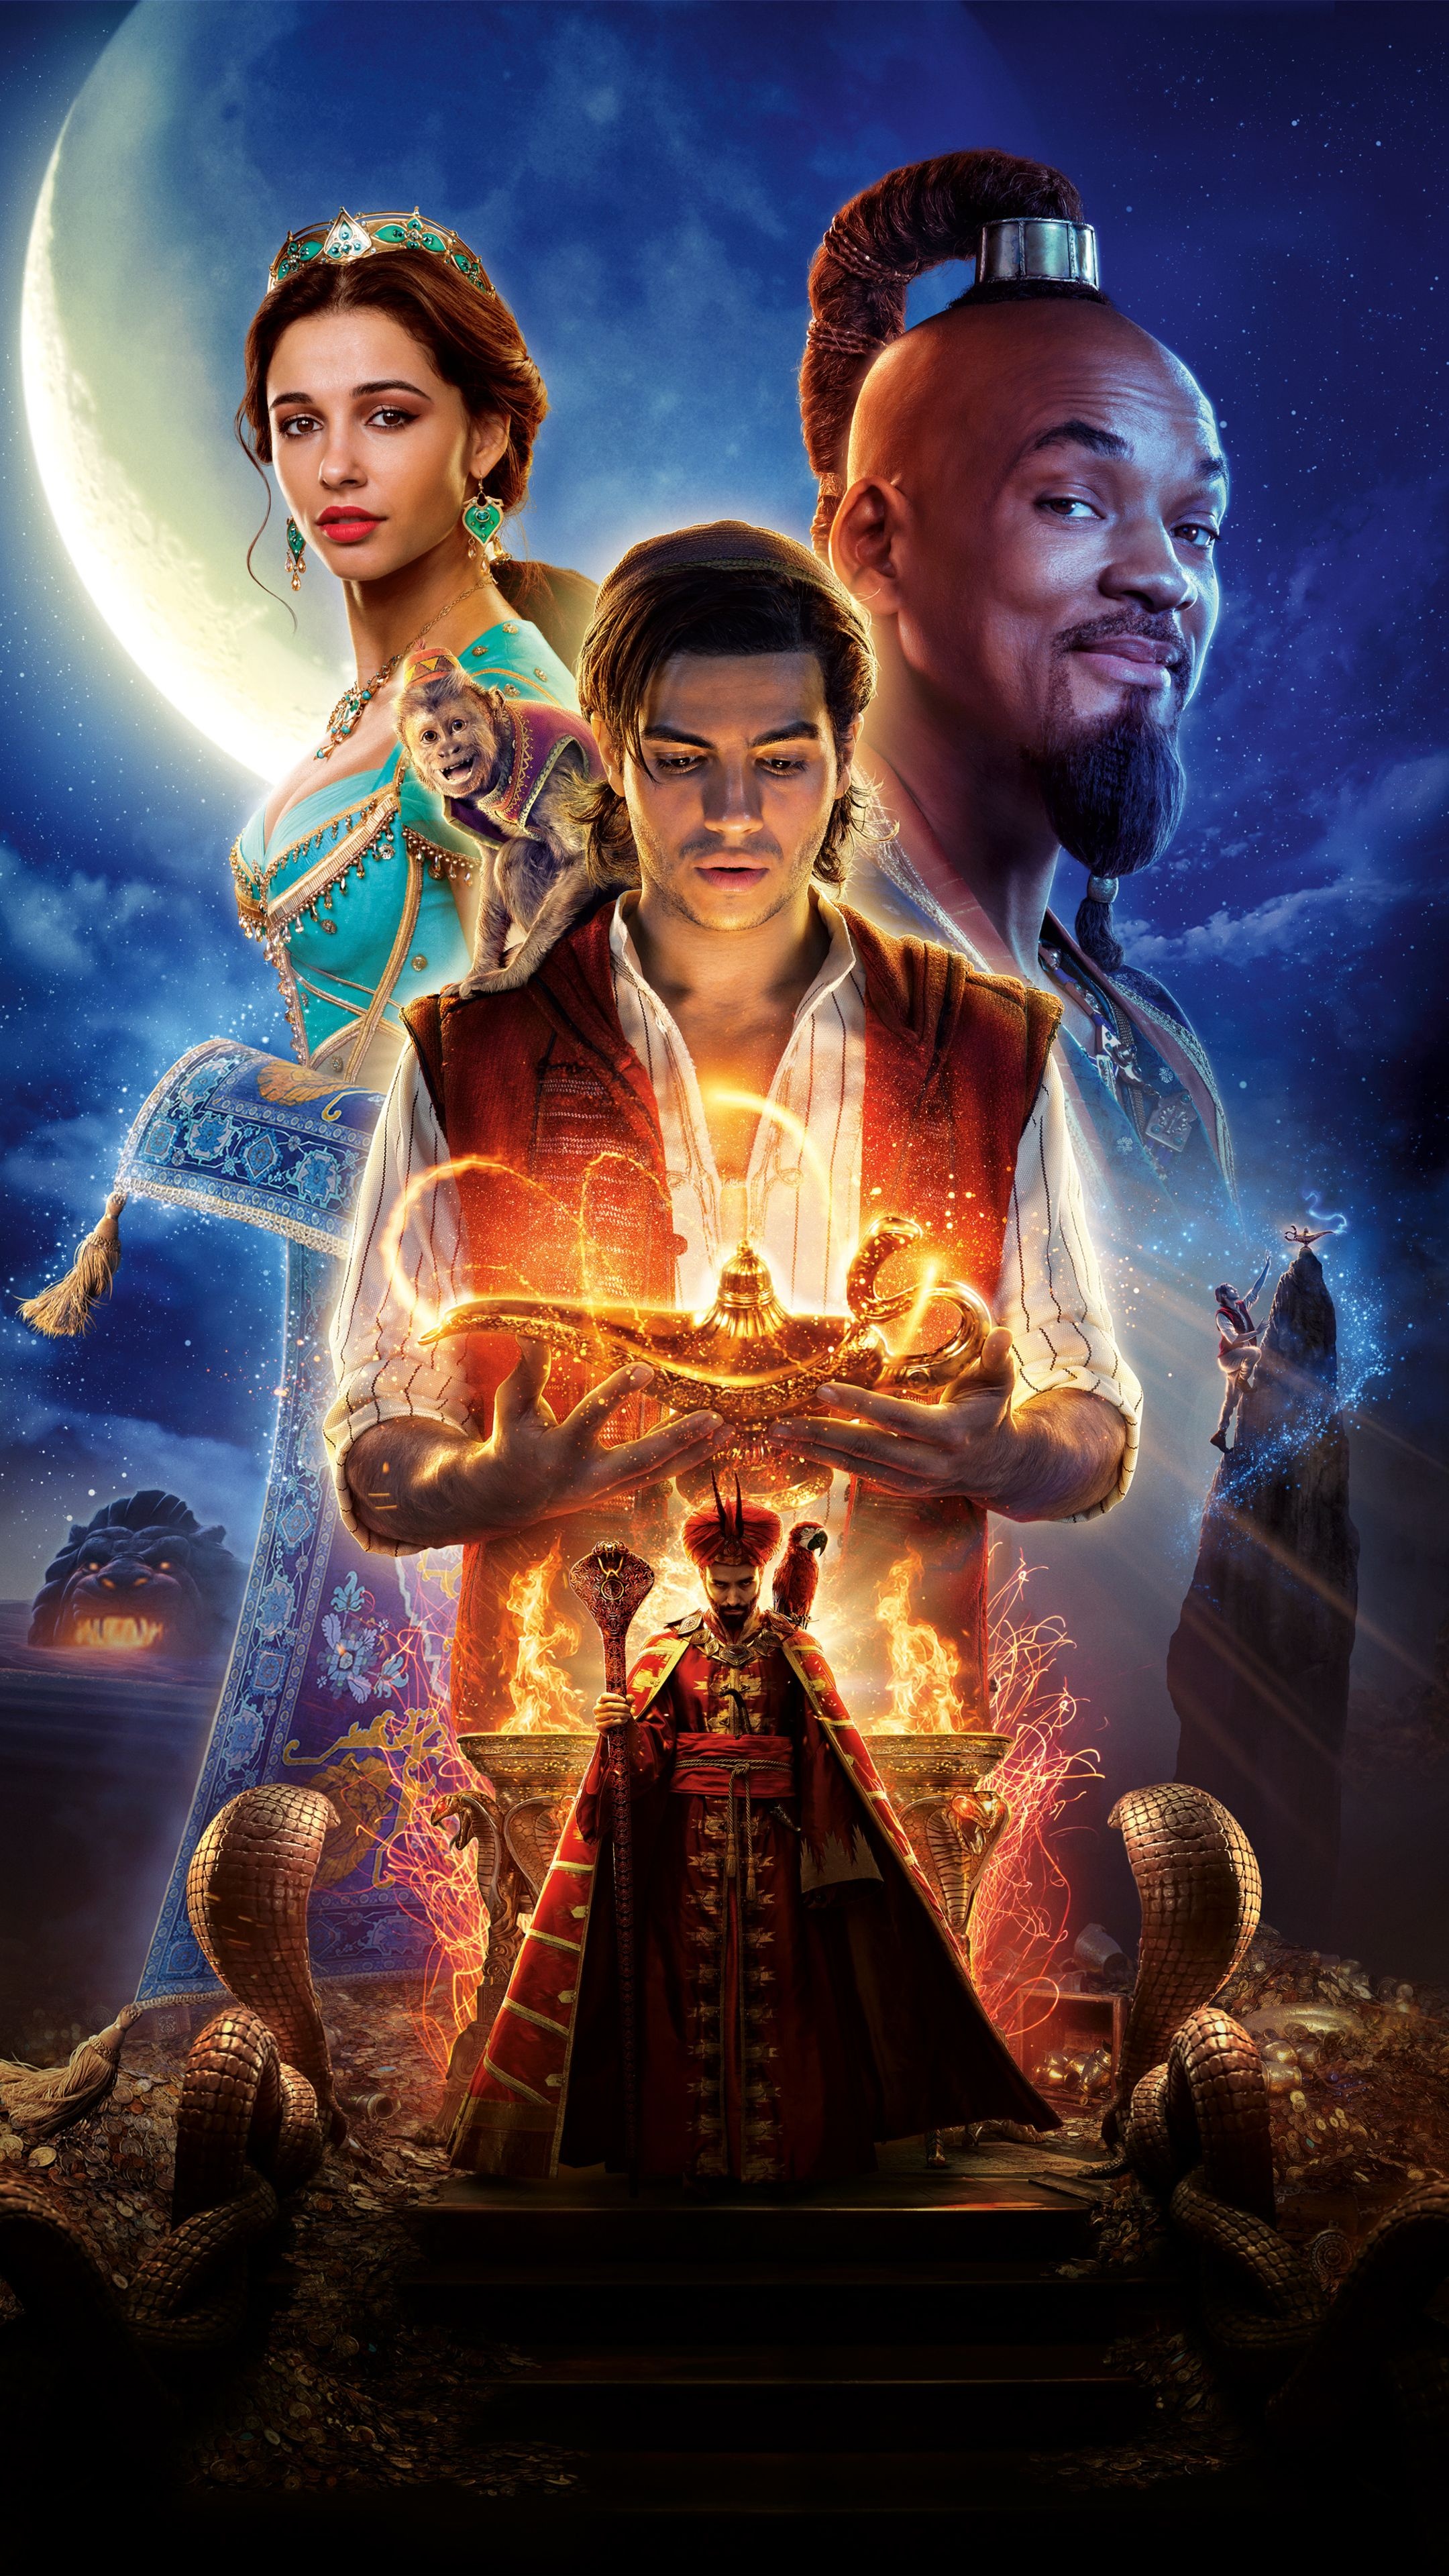 Disney Animation, Aladdin movie poster, 8K resolution, Disney films, 2160x3840 4K Handy